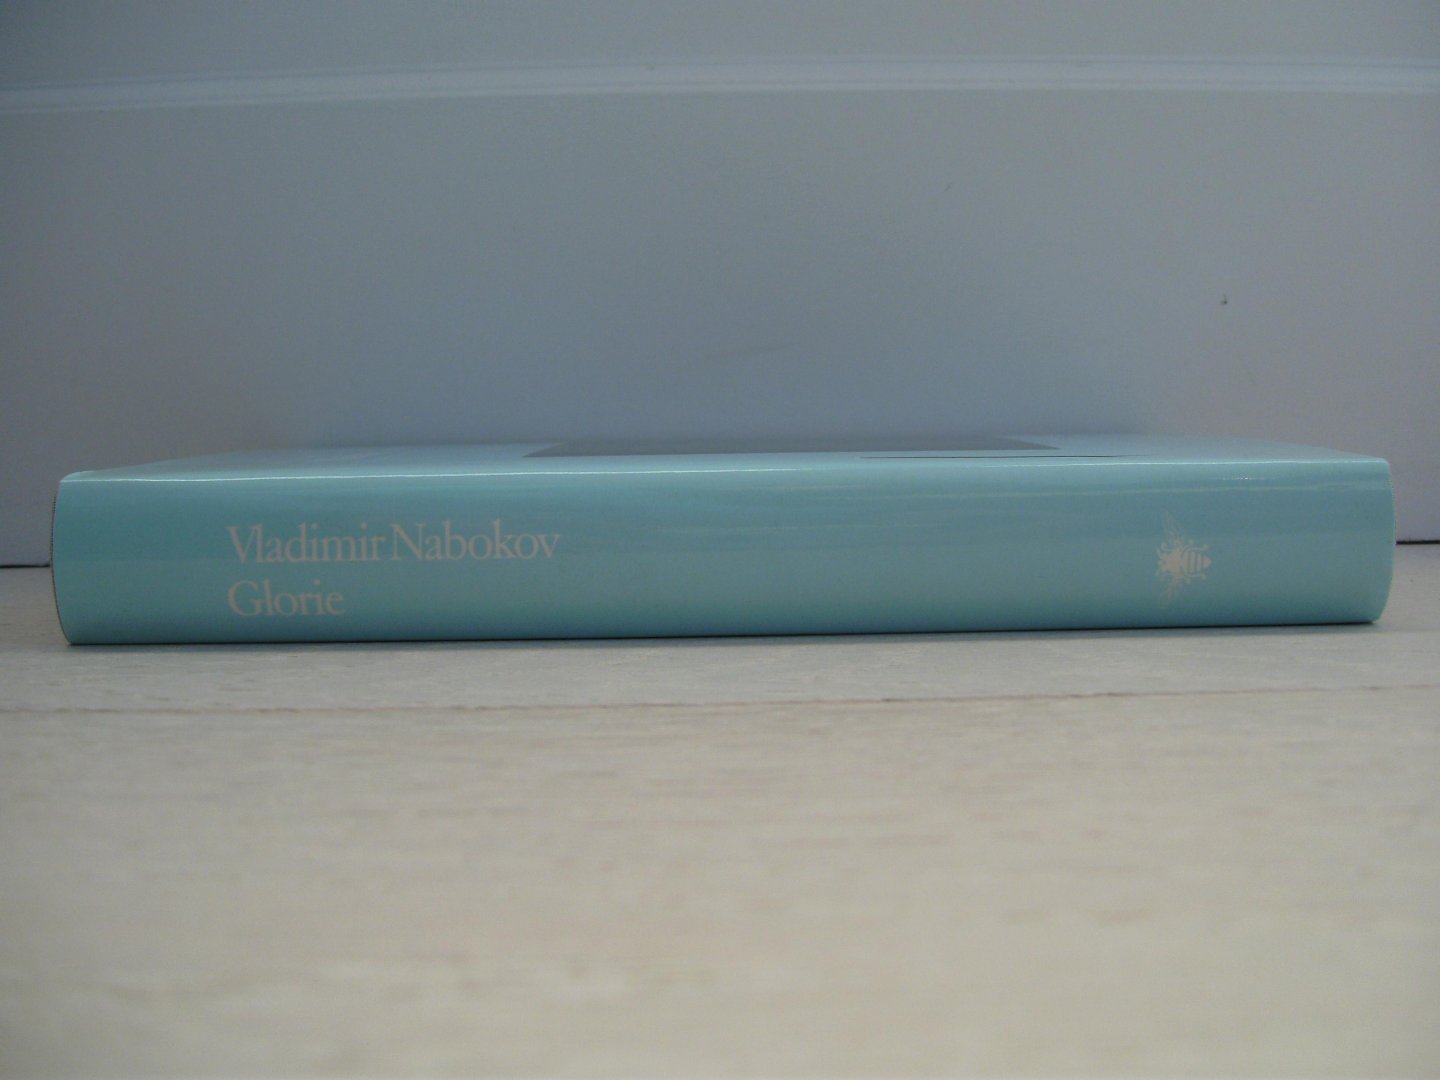 Nabokov, Vladimir - Glorie / roman